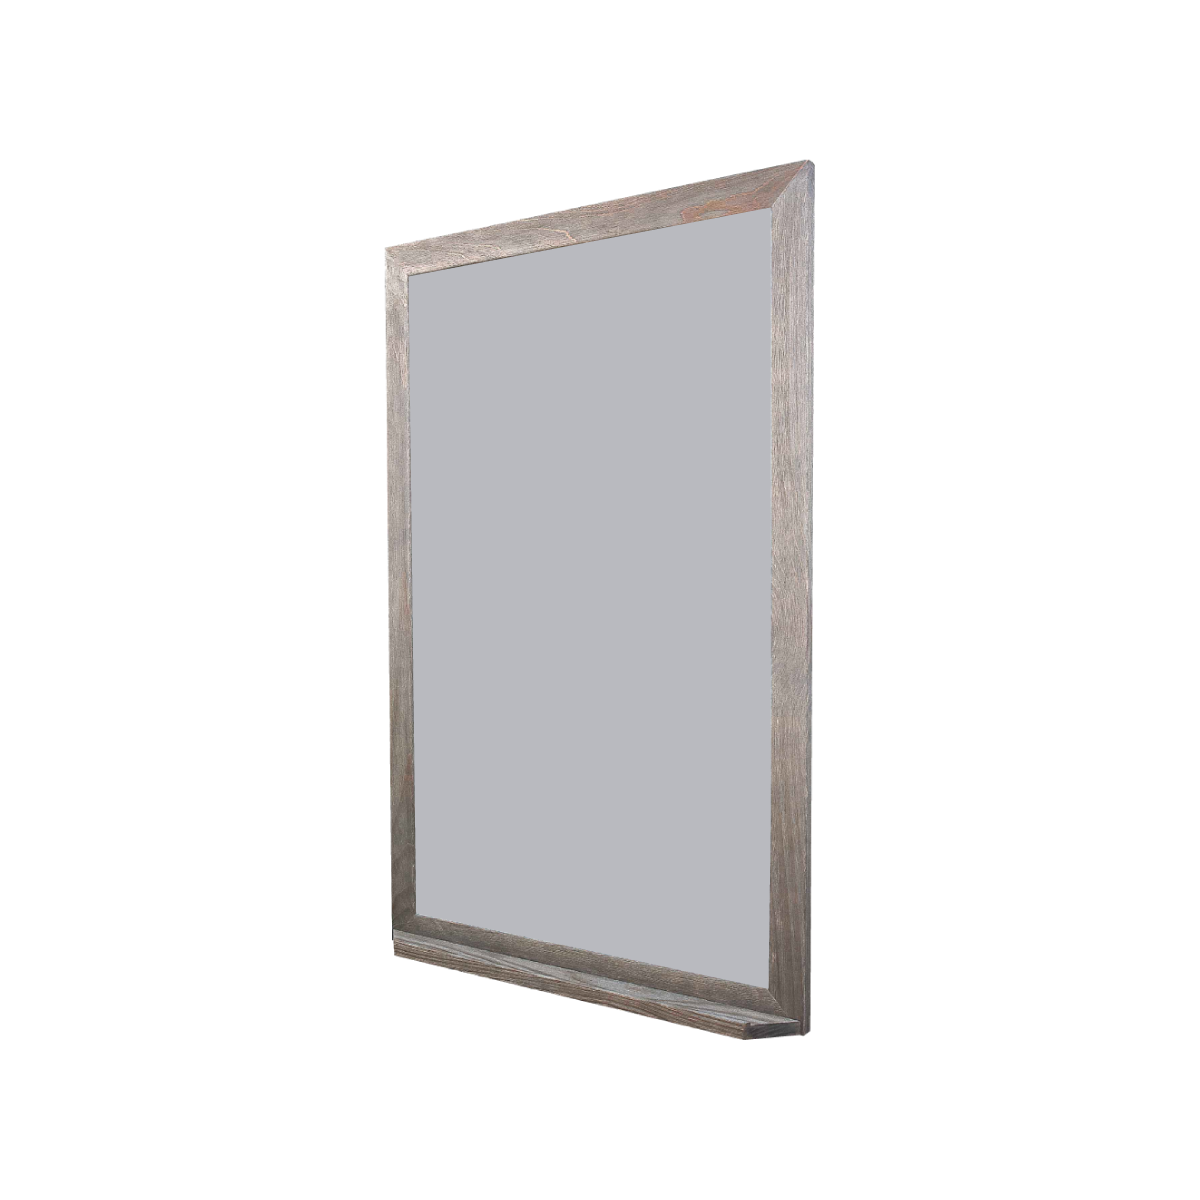 Barnwood Wood Frame | Rain | Portrait Color-Rite Non-Magnetic Whiteboard